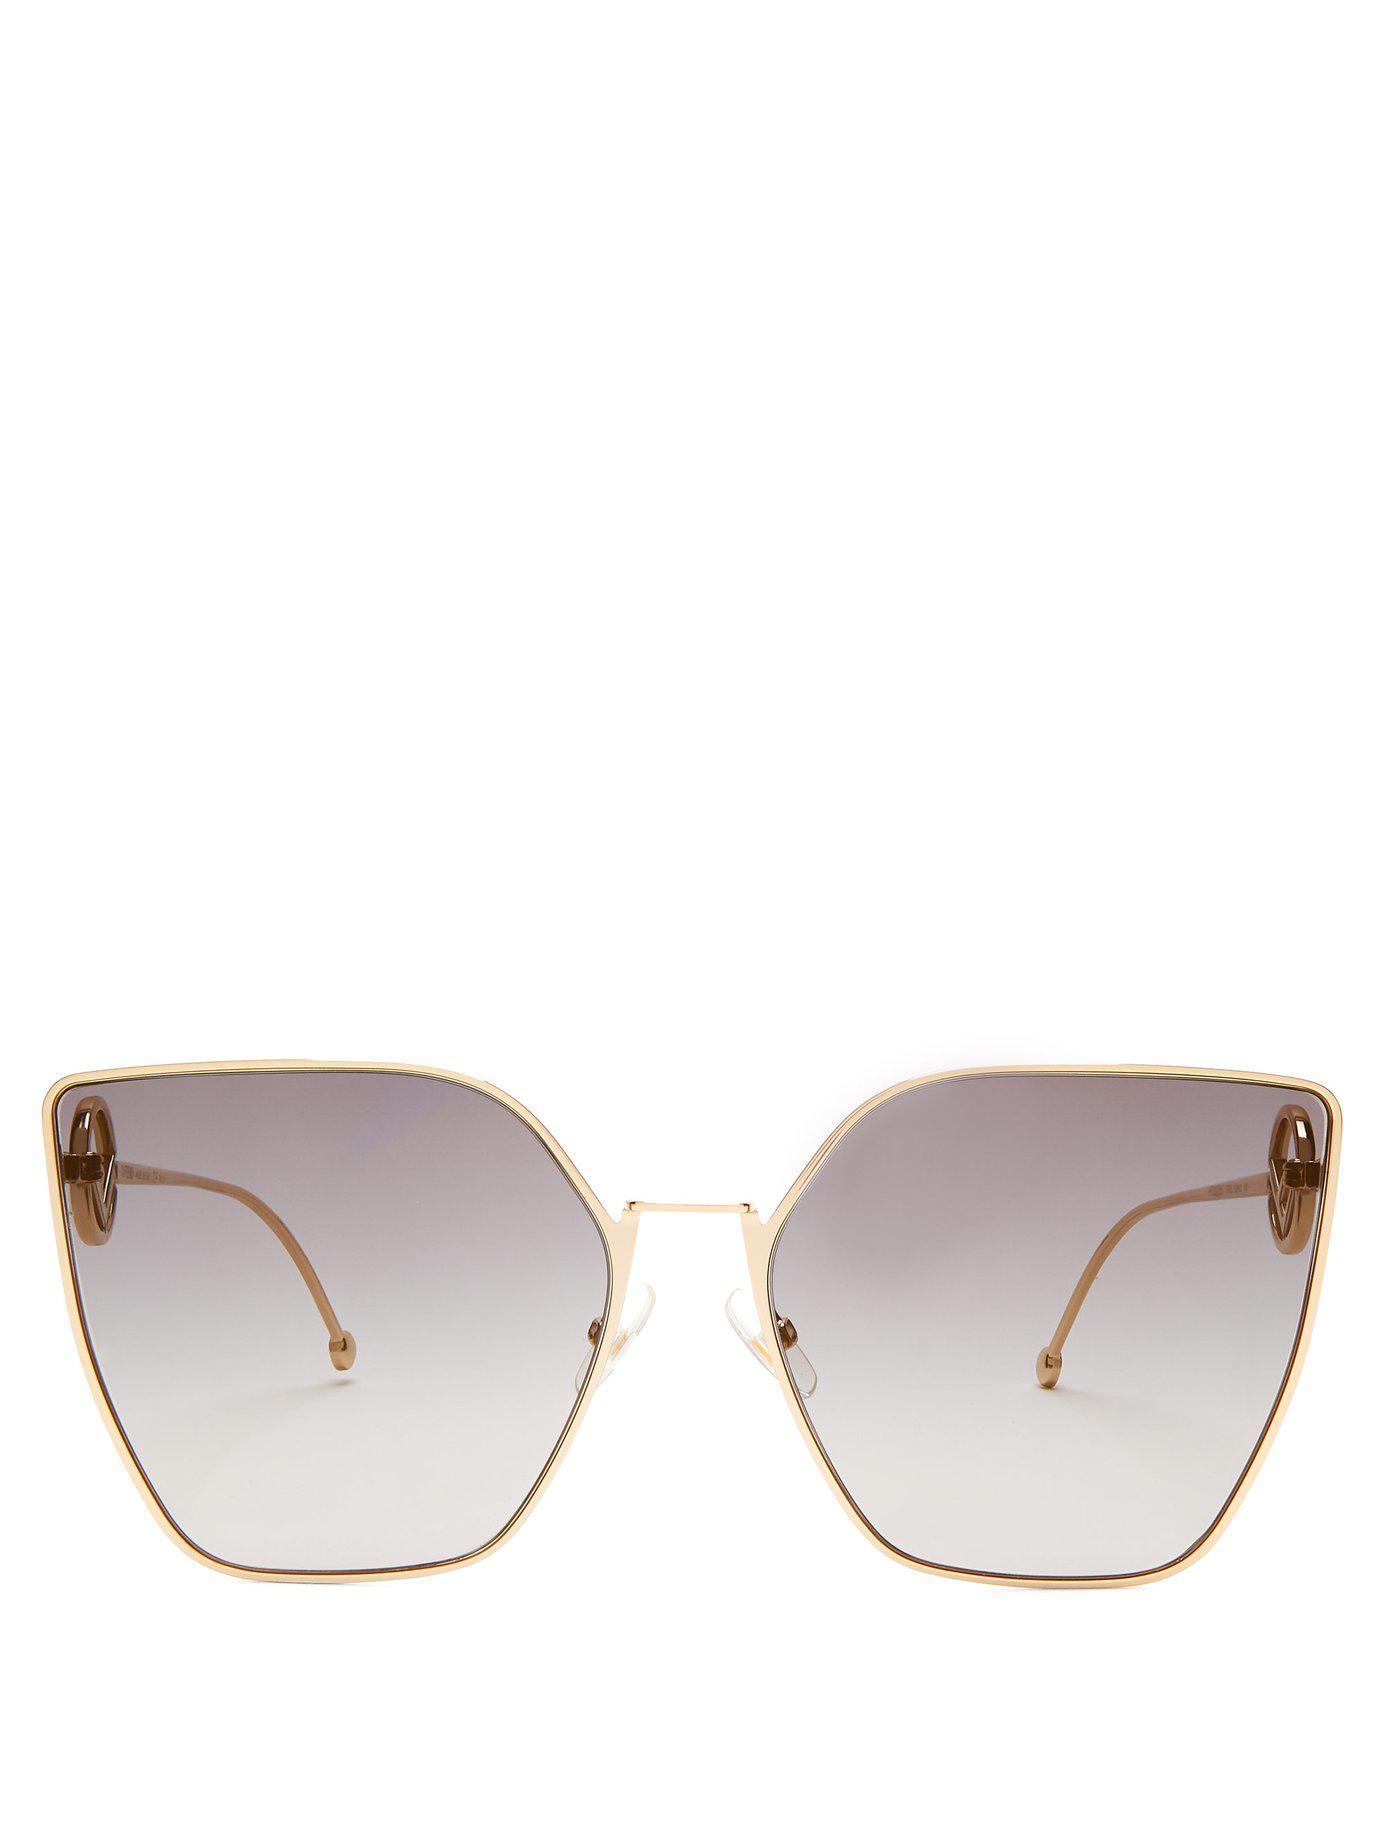 Fendi Oversized Cat Eye Sunglasses in Metallic | Lyst